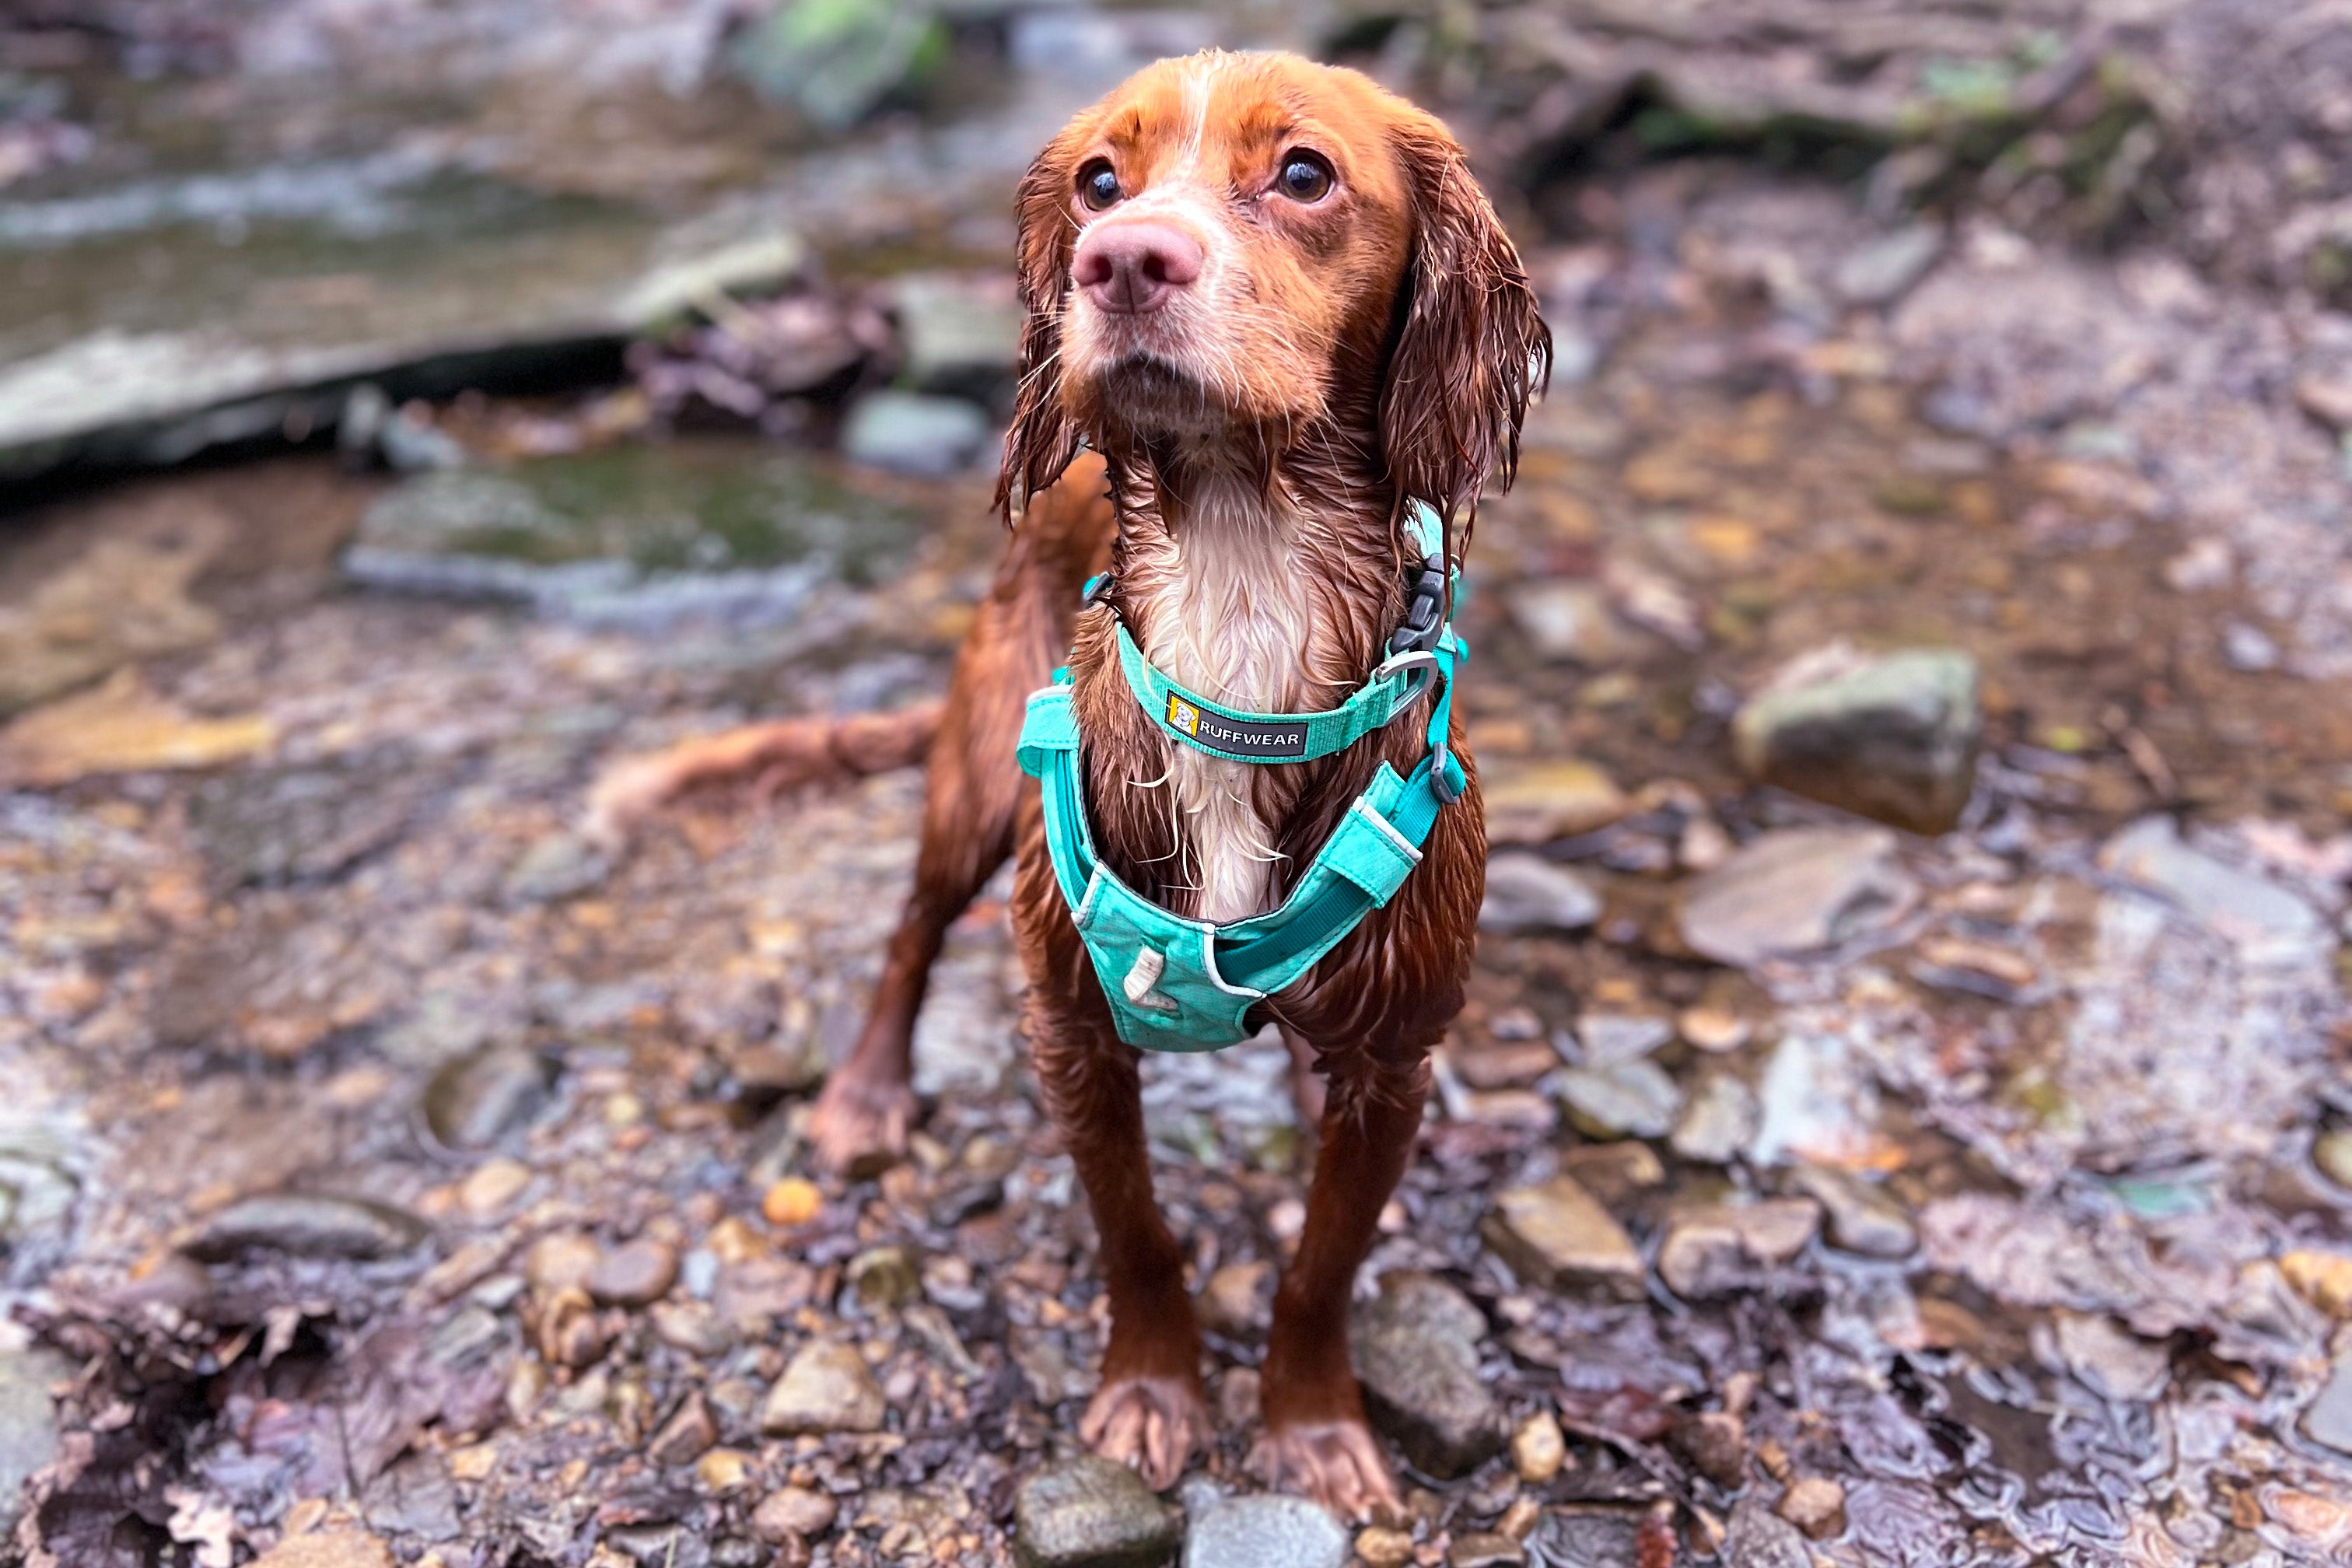 A very wet spaniel dog wearing a Ruffwear harness and collar